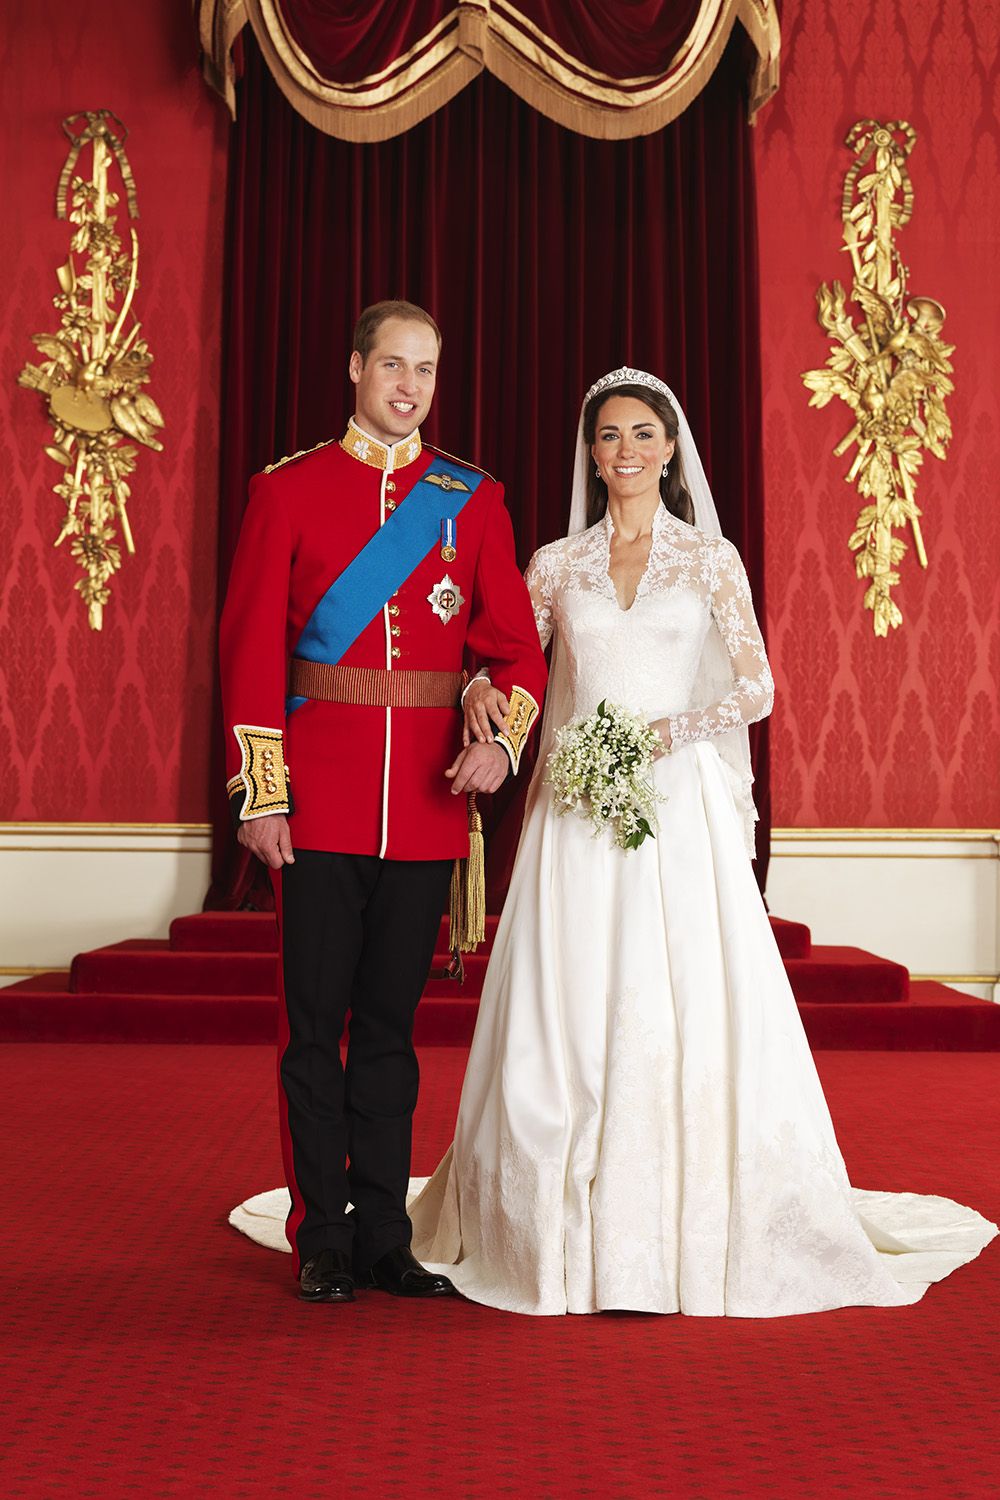 Prince William Wedding Photos ...